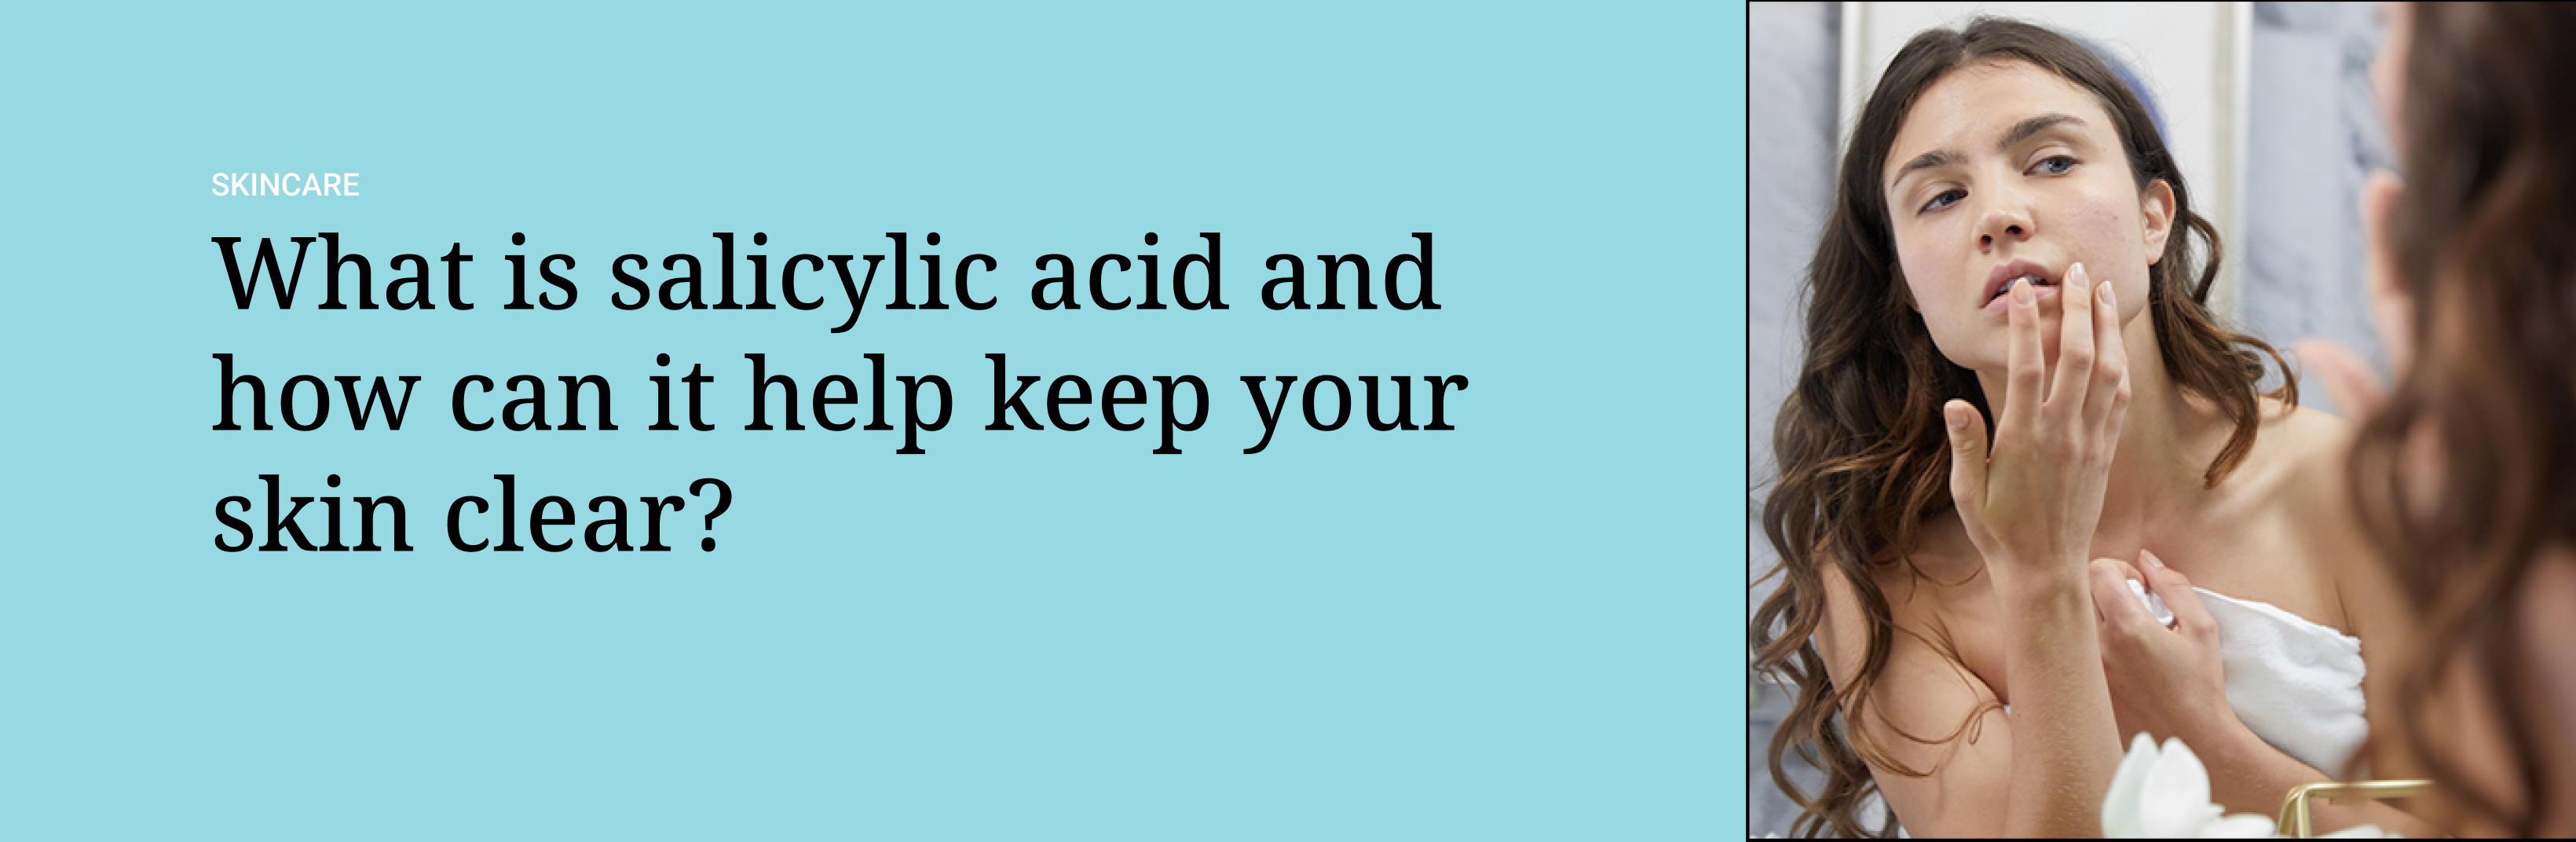 What is salicylic acid